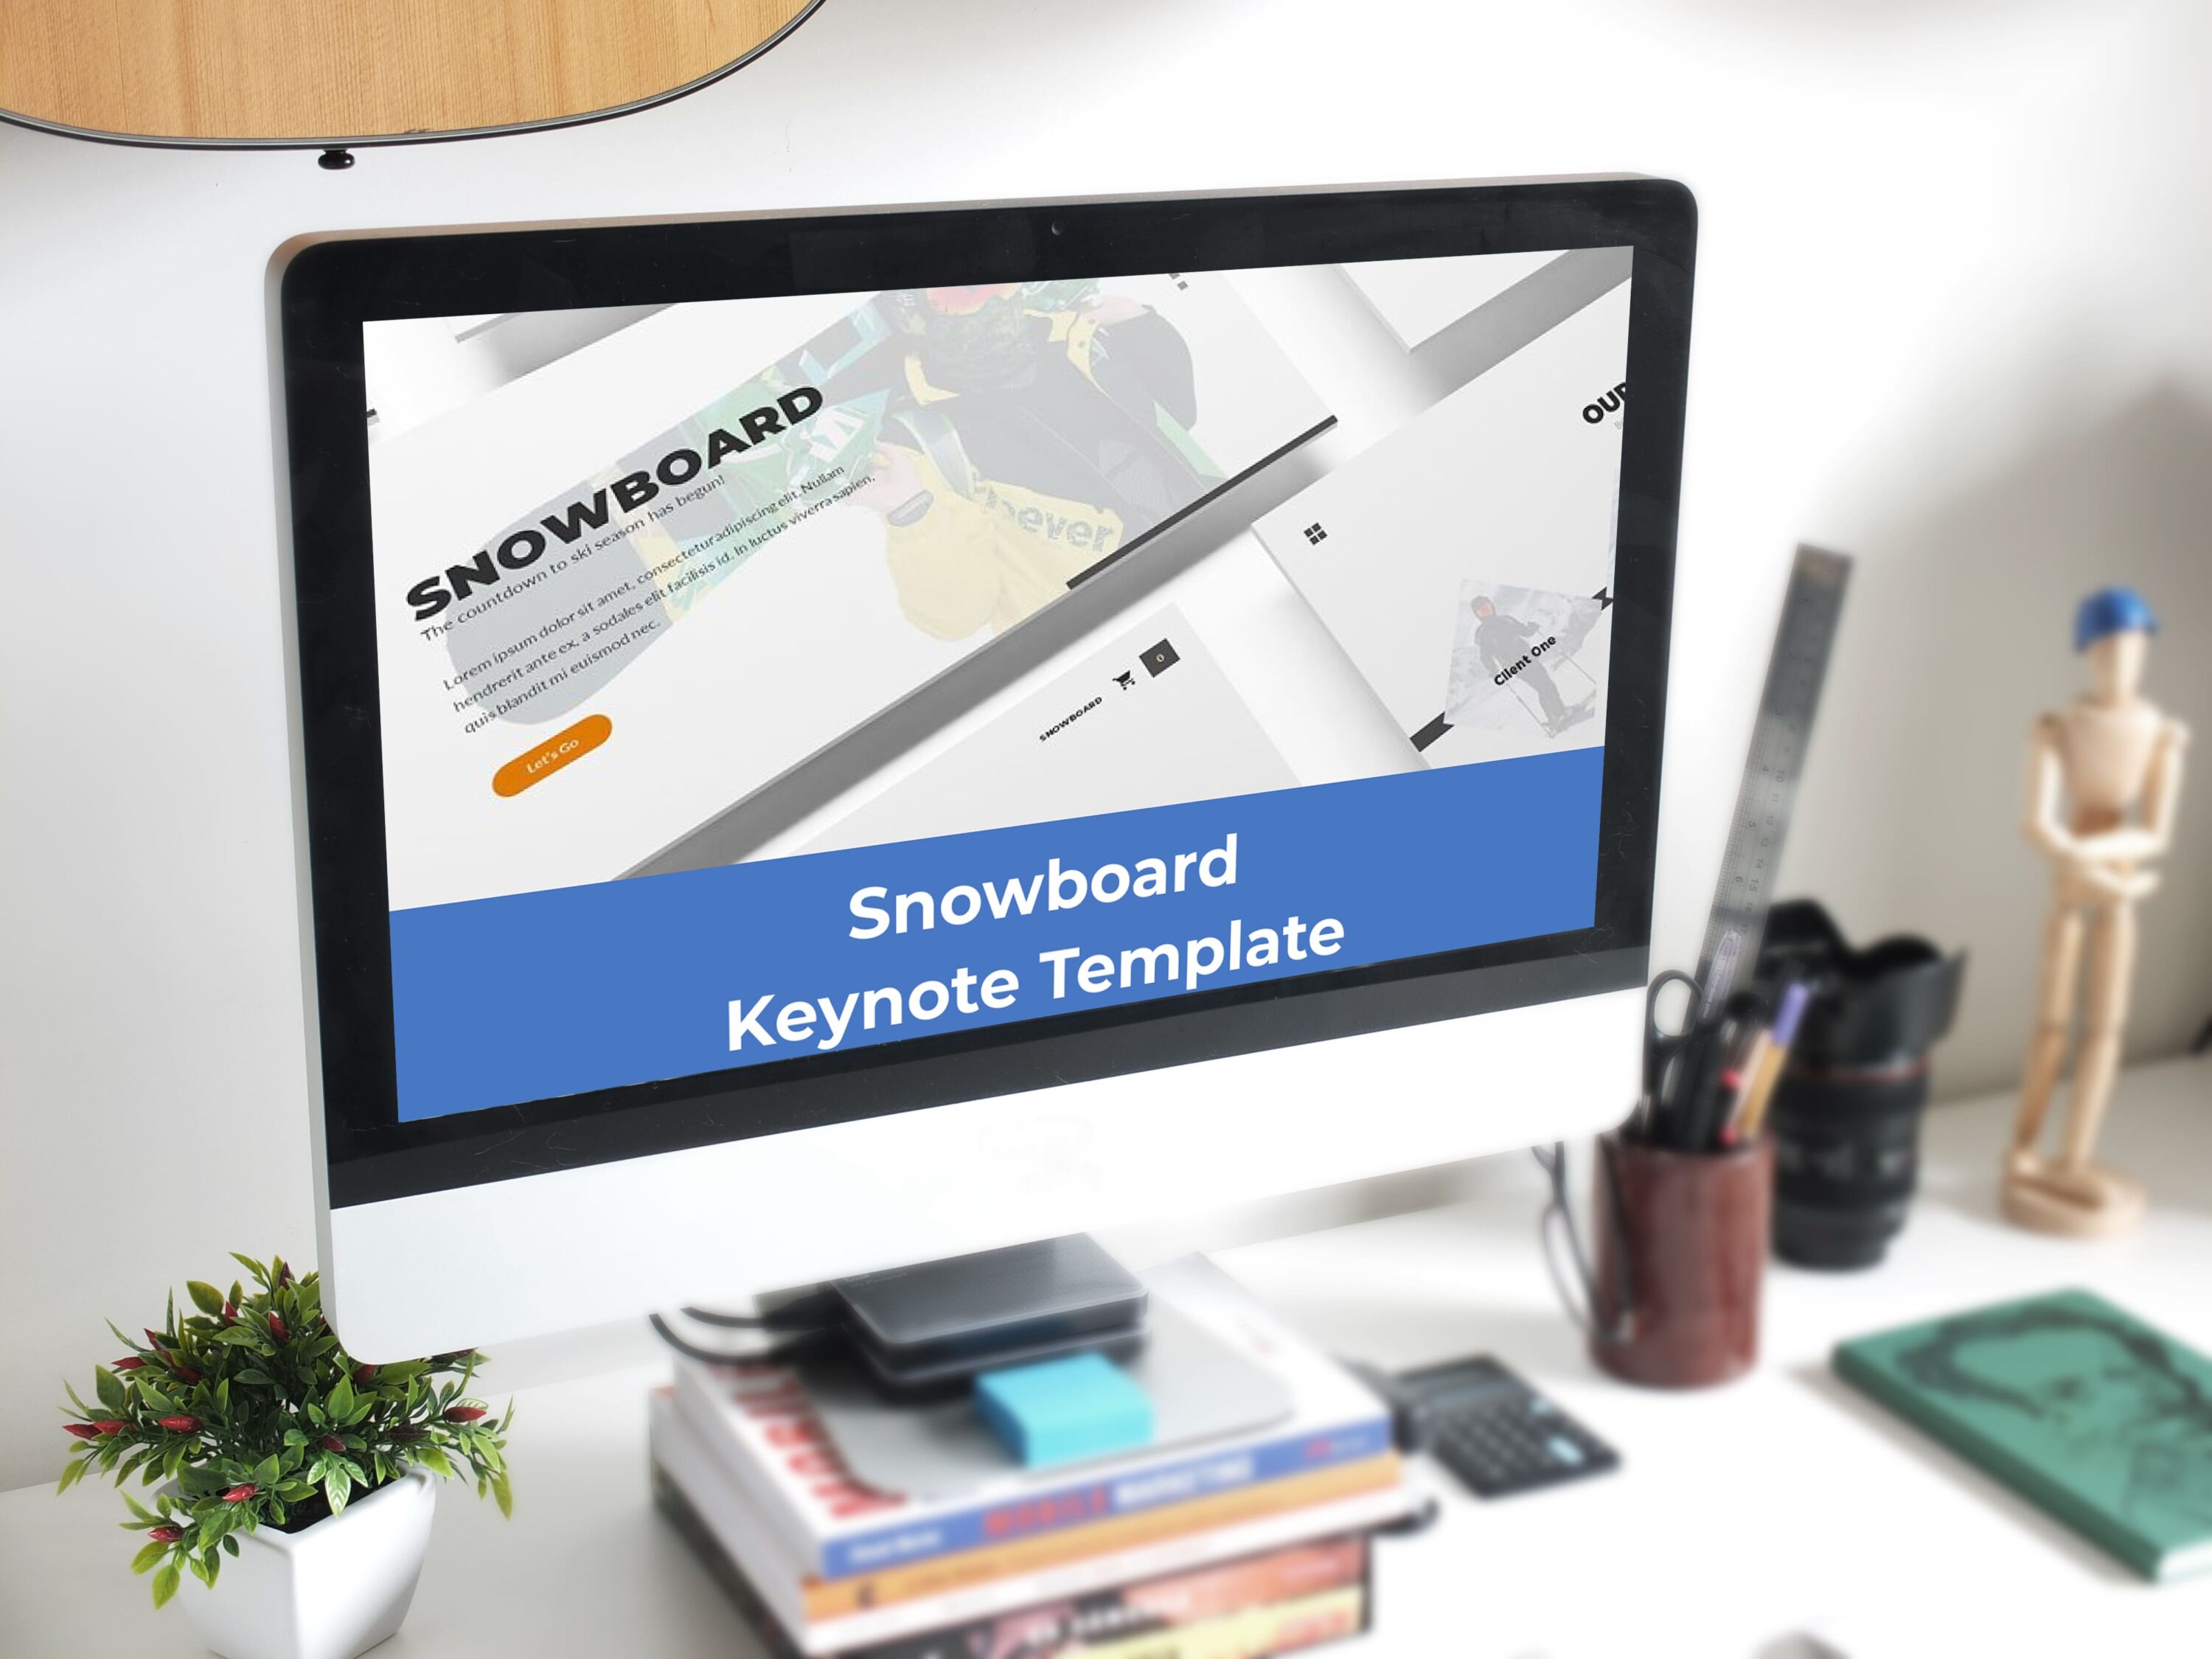 Snowboard Keynote Template - Mockup on Desktop.